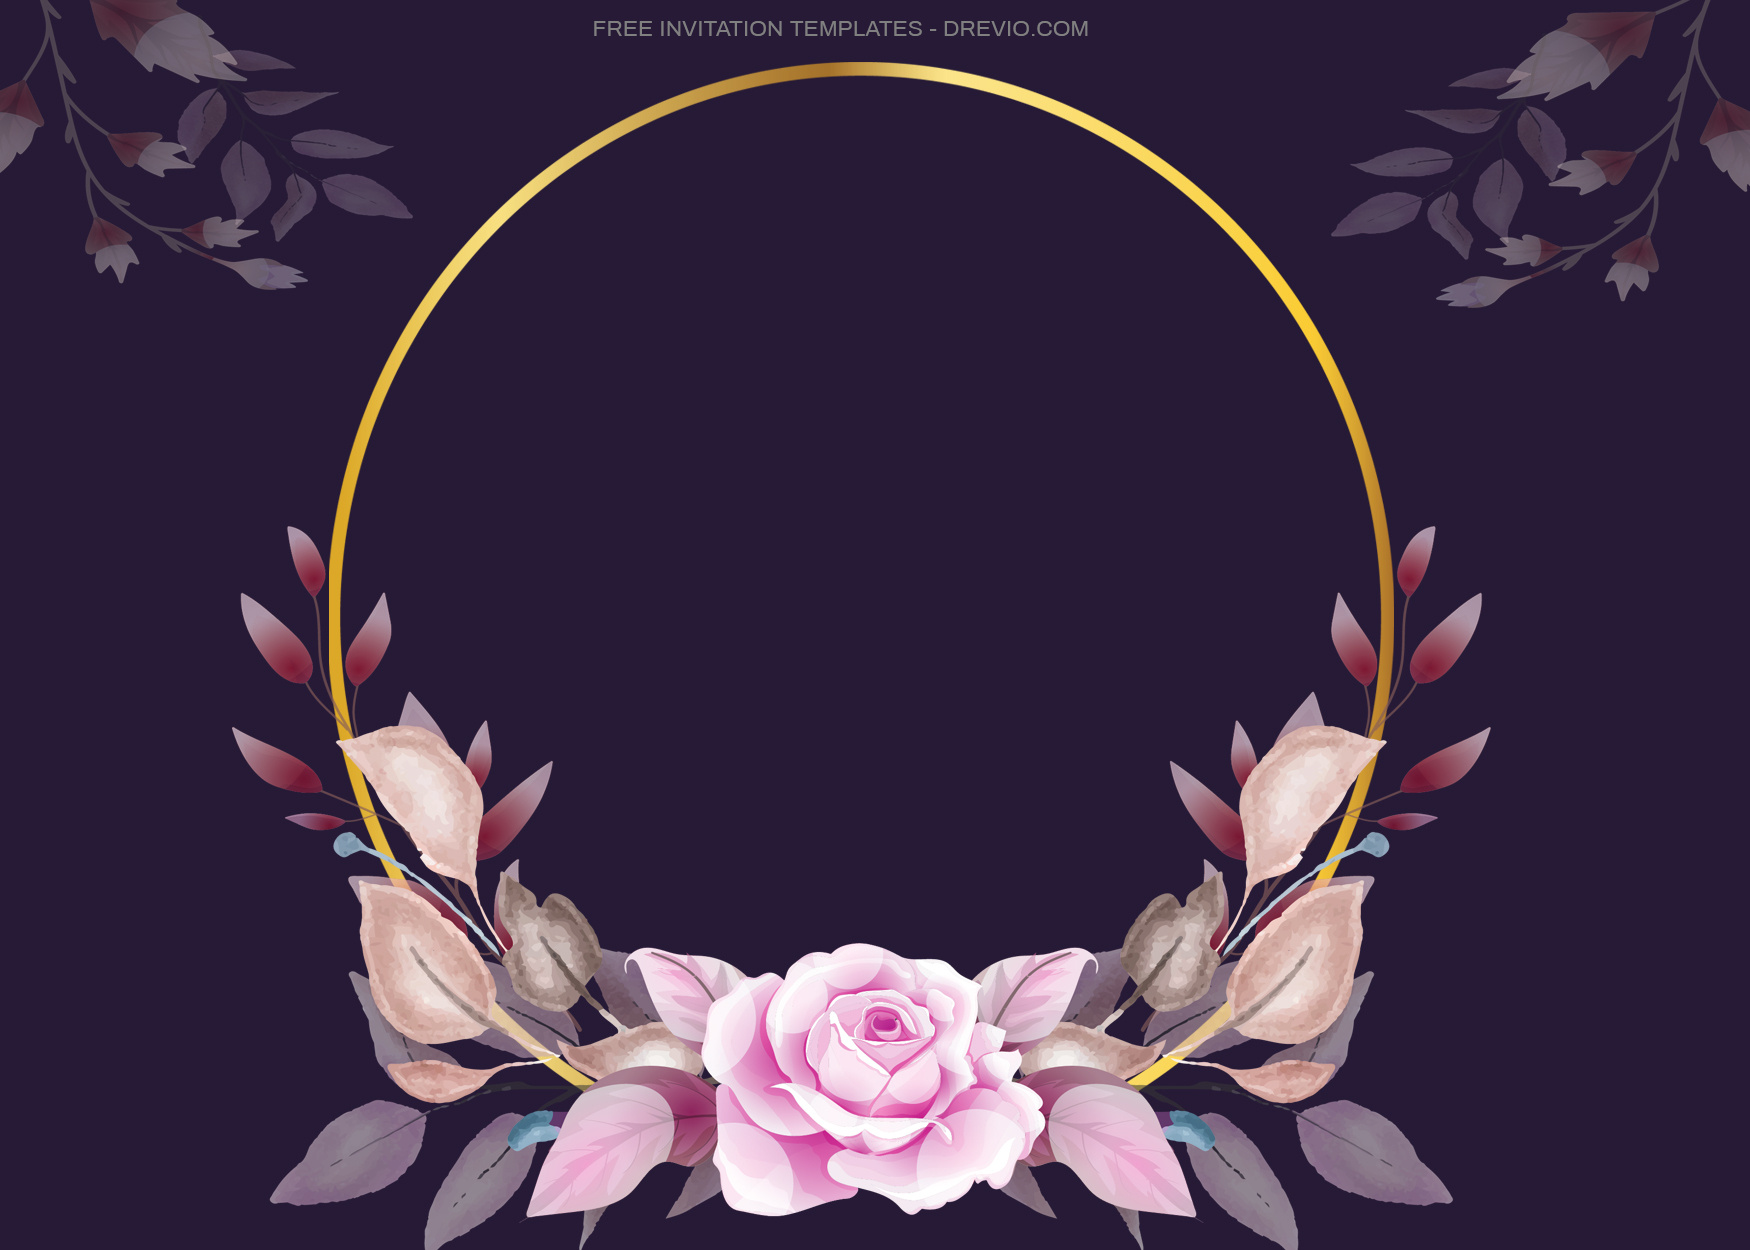 7+ Golden Purple Roses Floral Invitation Template